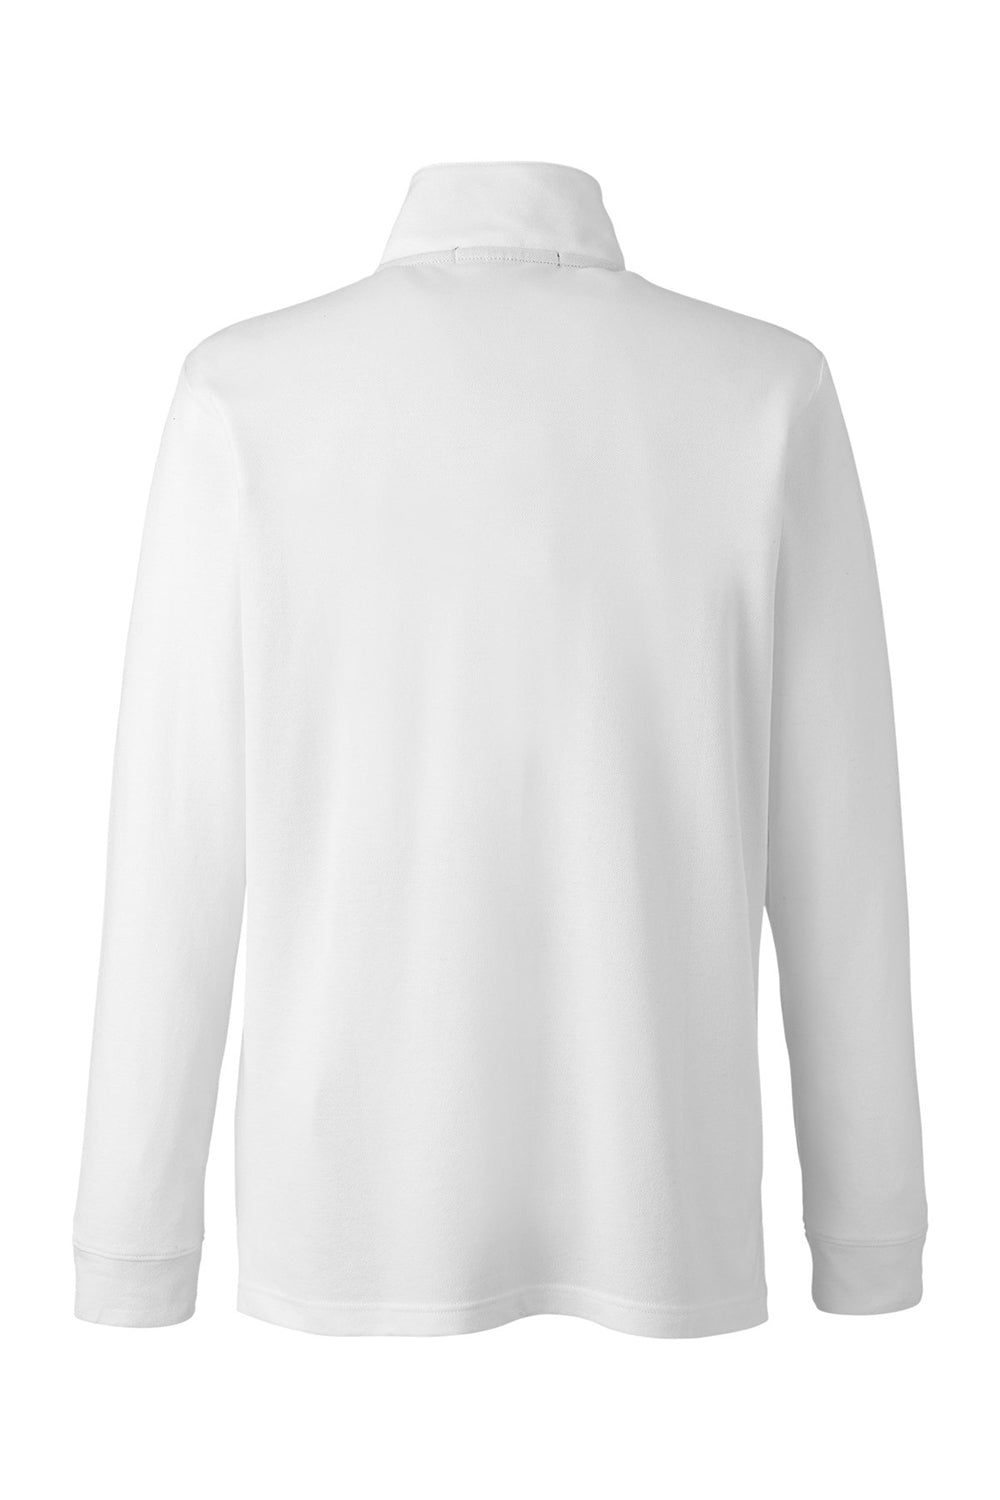 Devon & Jones DG400 Mens New Classics Performance Moisture Wicking 1/4 Zip Sweatshirt White Flat Back